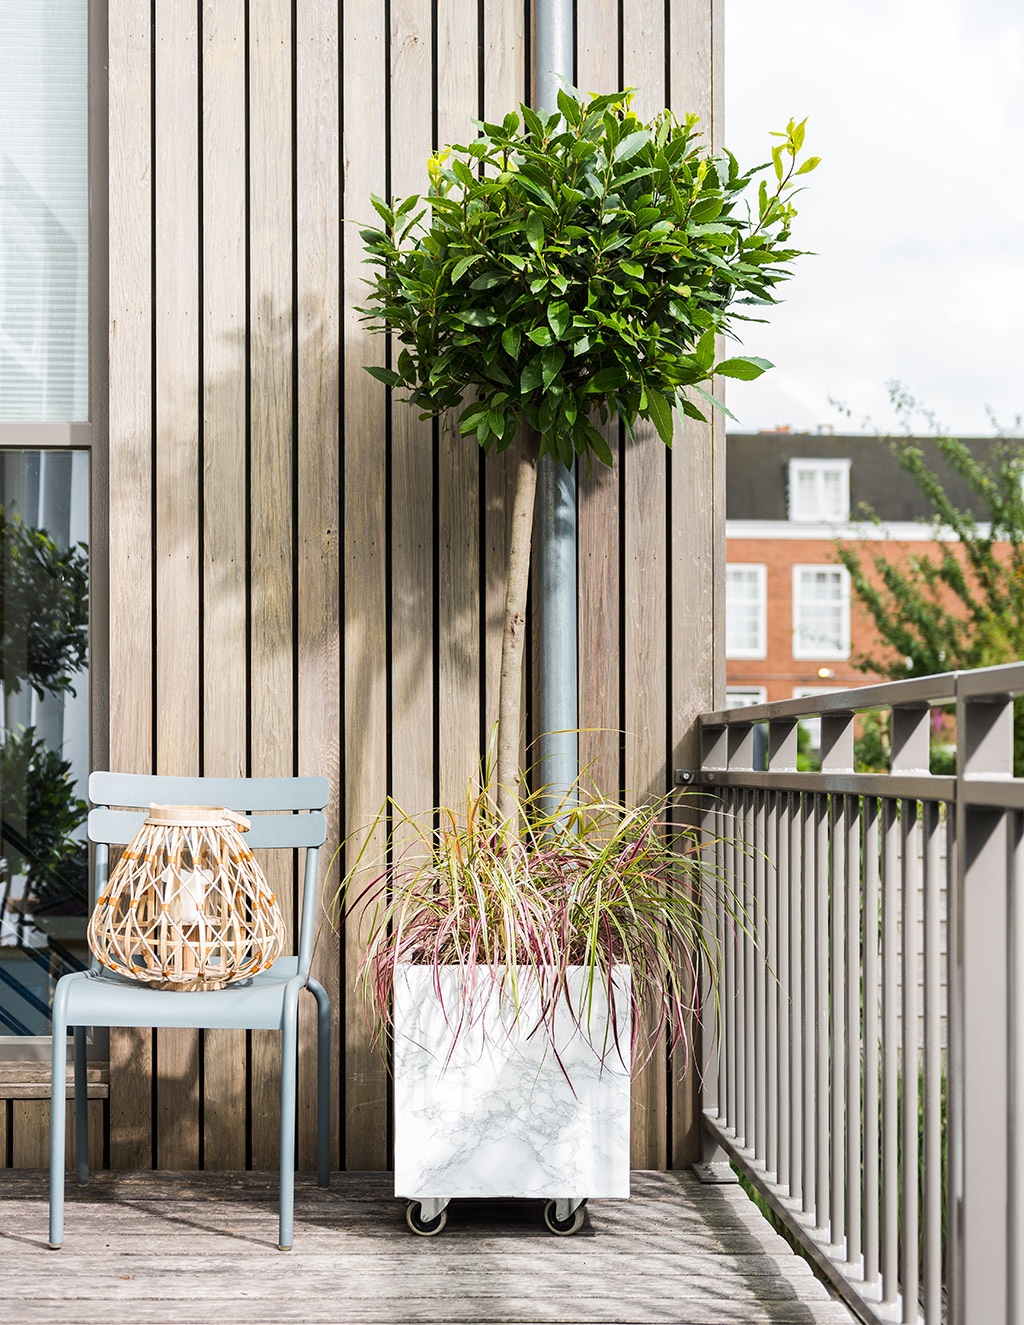 Balkonplant 2019 Laurier | Stek Magazine | Balkon